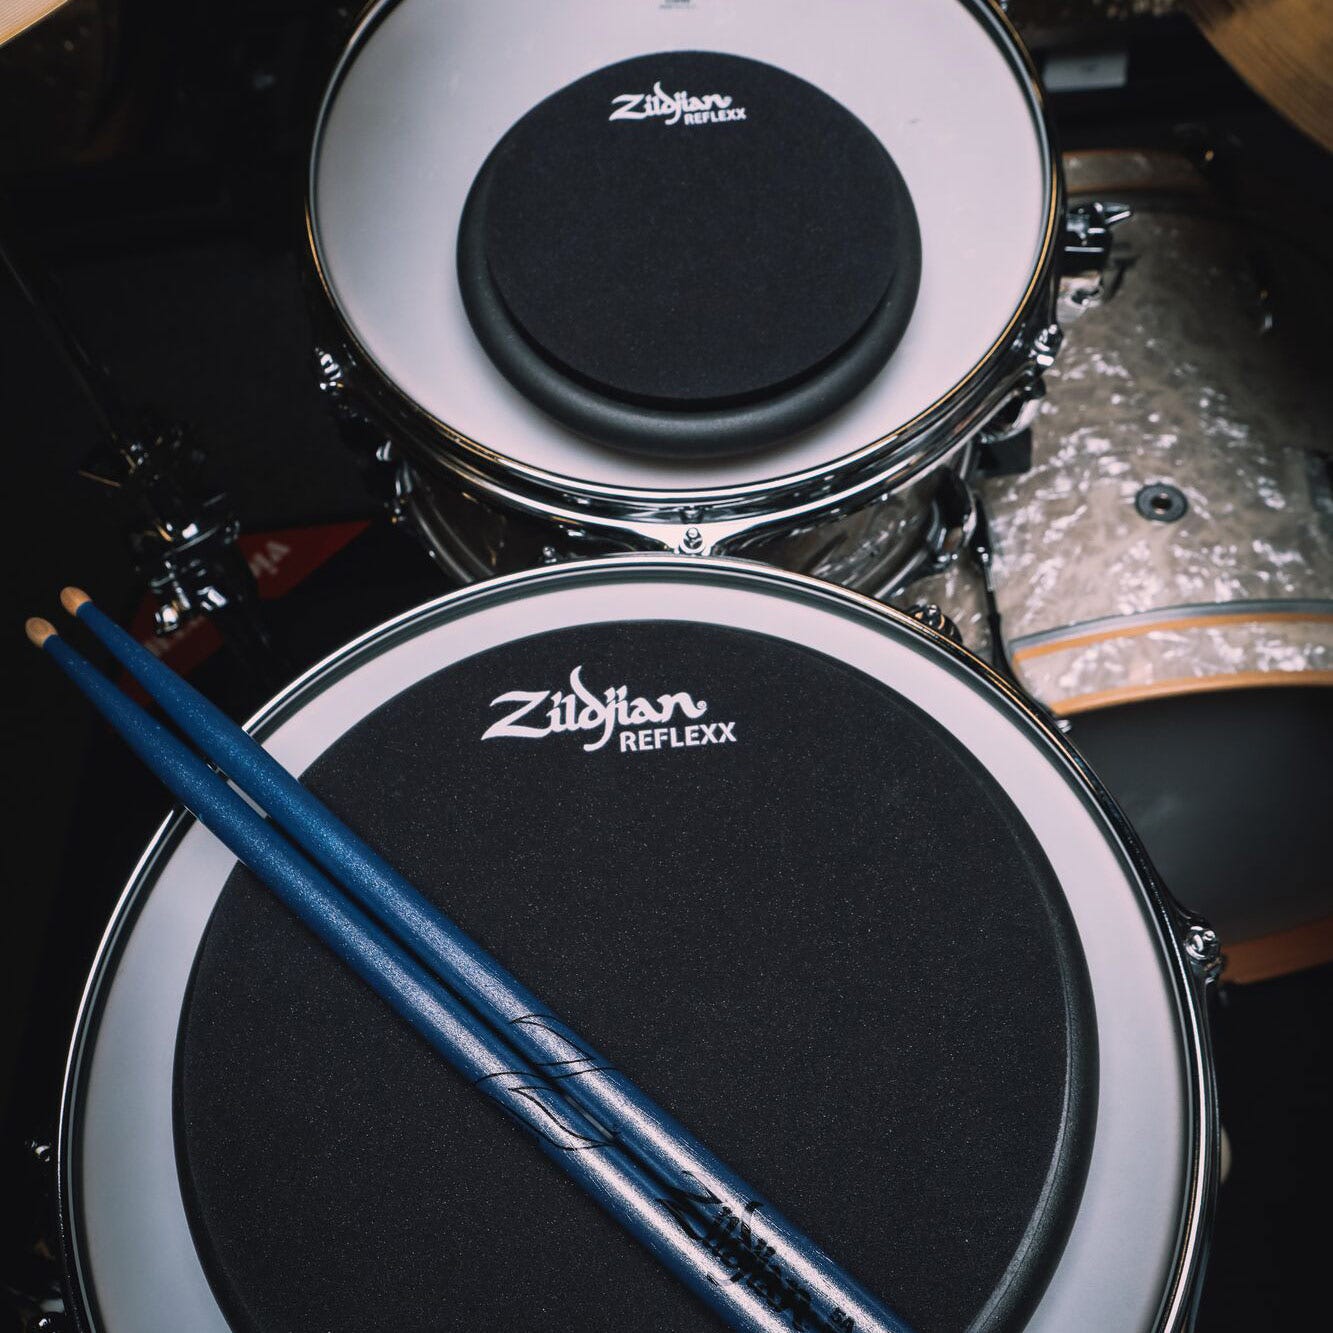 Black Zildjian Reflexx Pads on drumkit